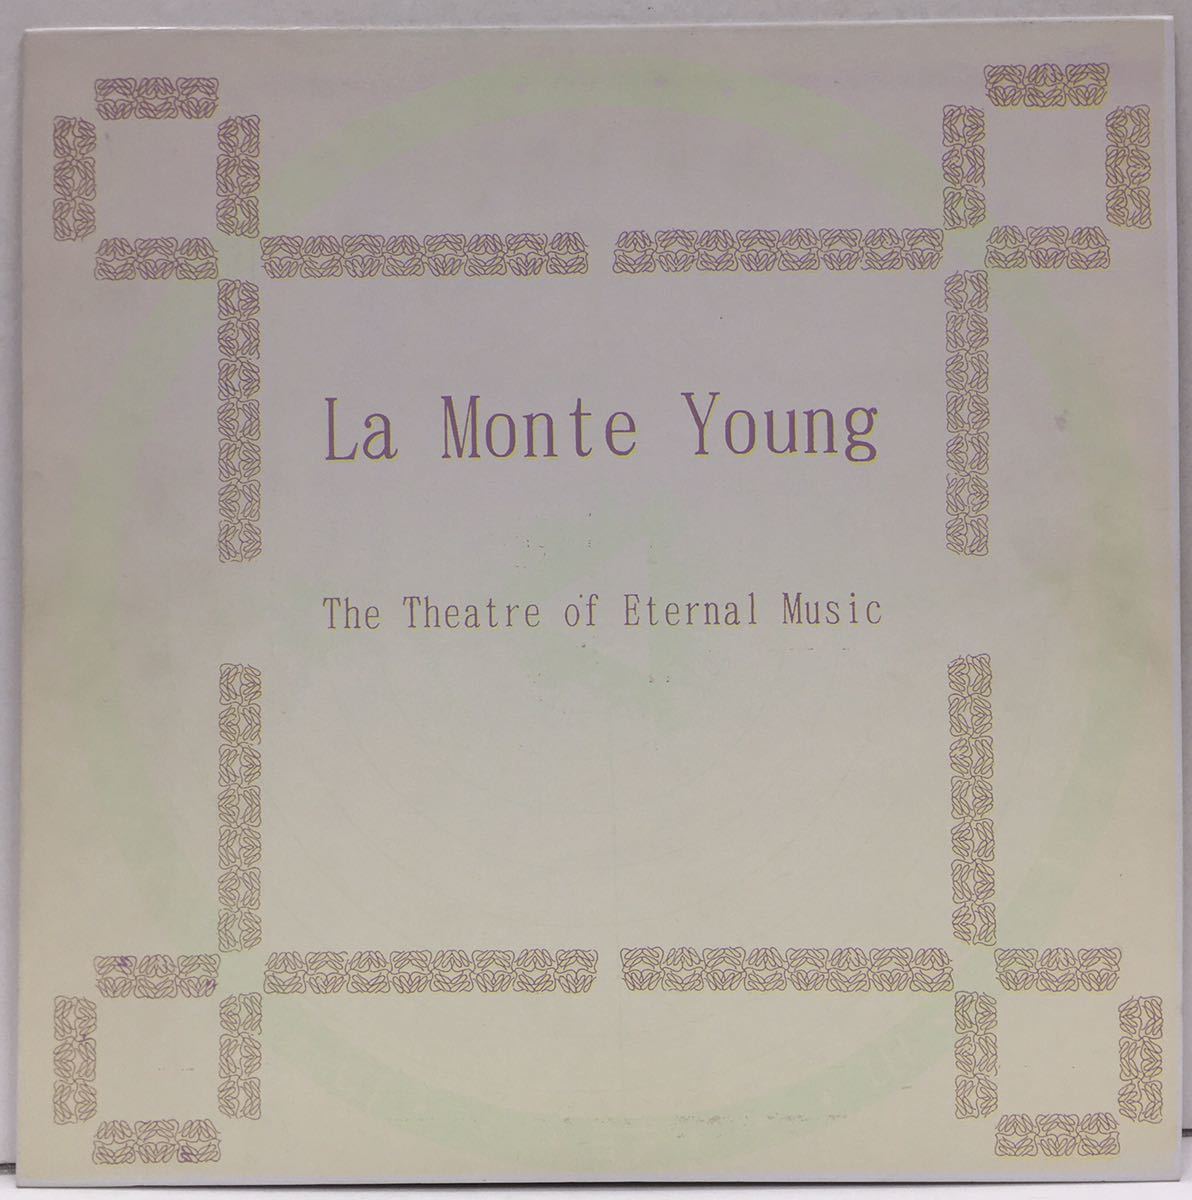 LP La Monte Young The Theatre Of Eternal Music DH-1001 John Cale(Velvet Underground) Tony Conrad 限定200枚 プライベート盤_画像1